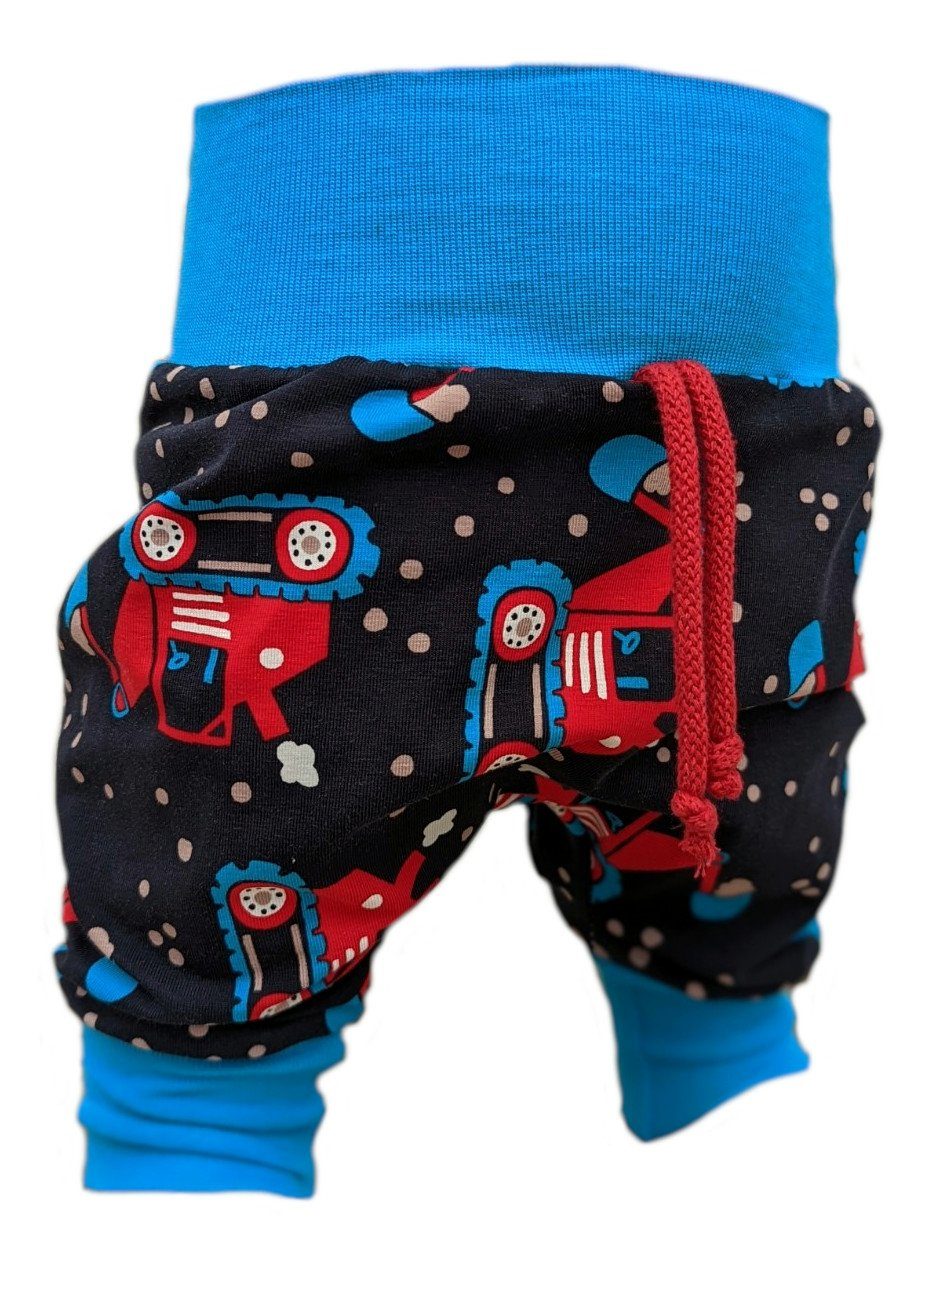 Corileo Pumphose »Baby / Kinder Pumphose Großer Bagger Spielhose Handmade  Gr 50 - 104« online kaufen | OTTO